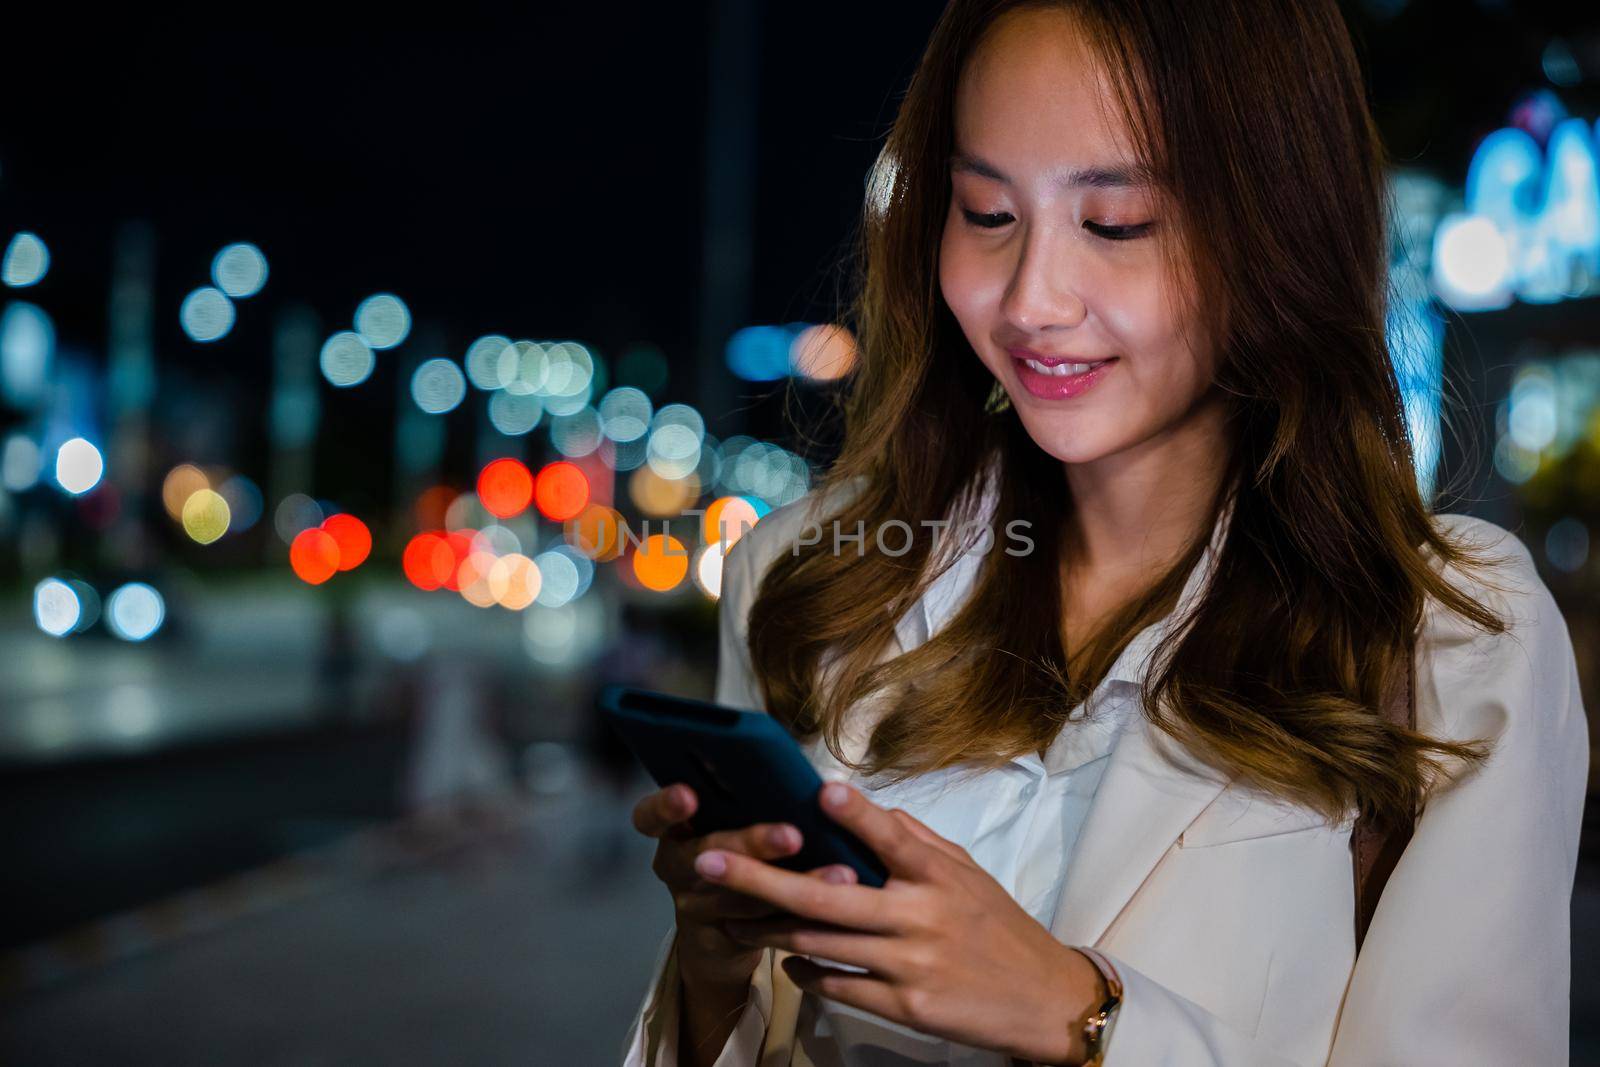 Business woman using mobile phone walking through night city street by Sorapop